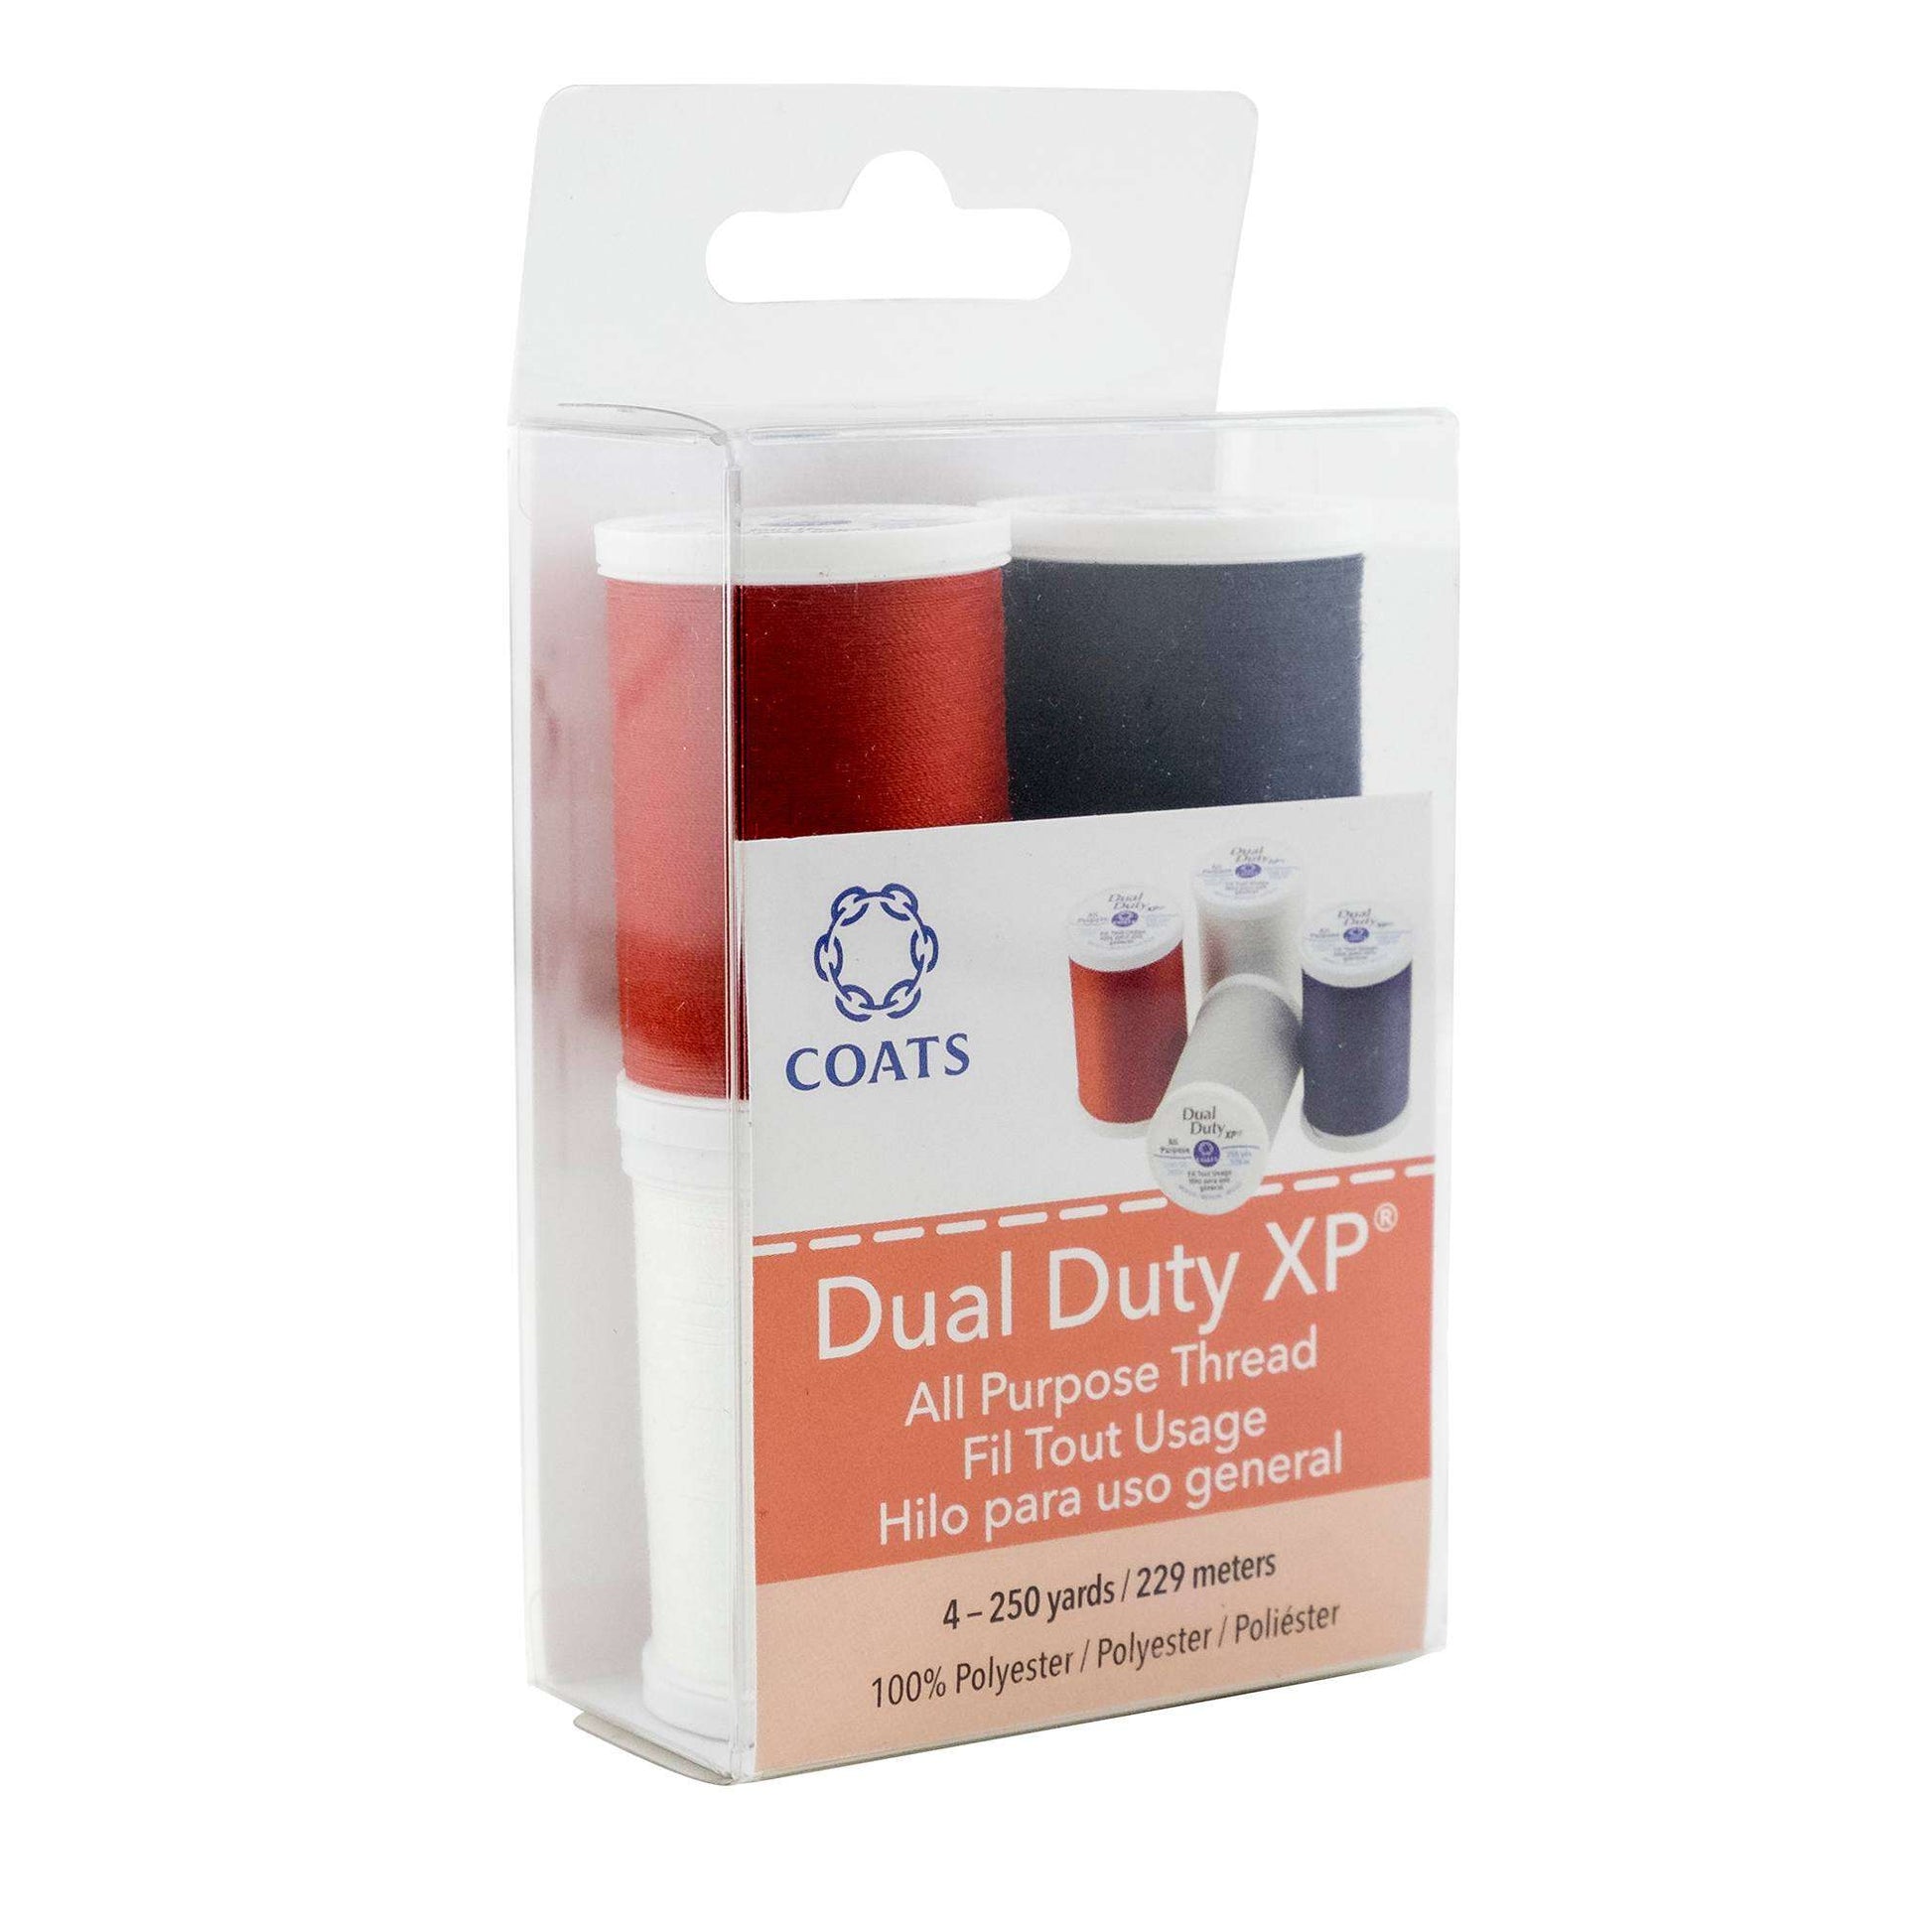 Dual Duty XP All Purpose Sewing Thread, 4 Spools